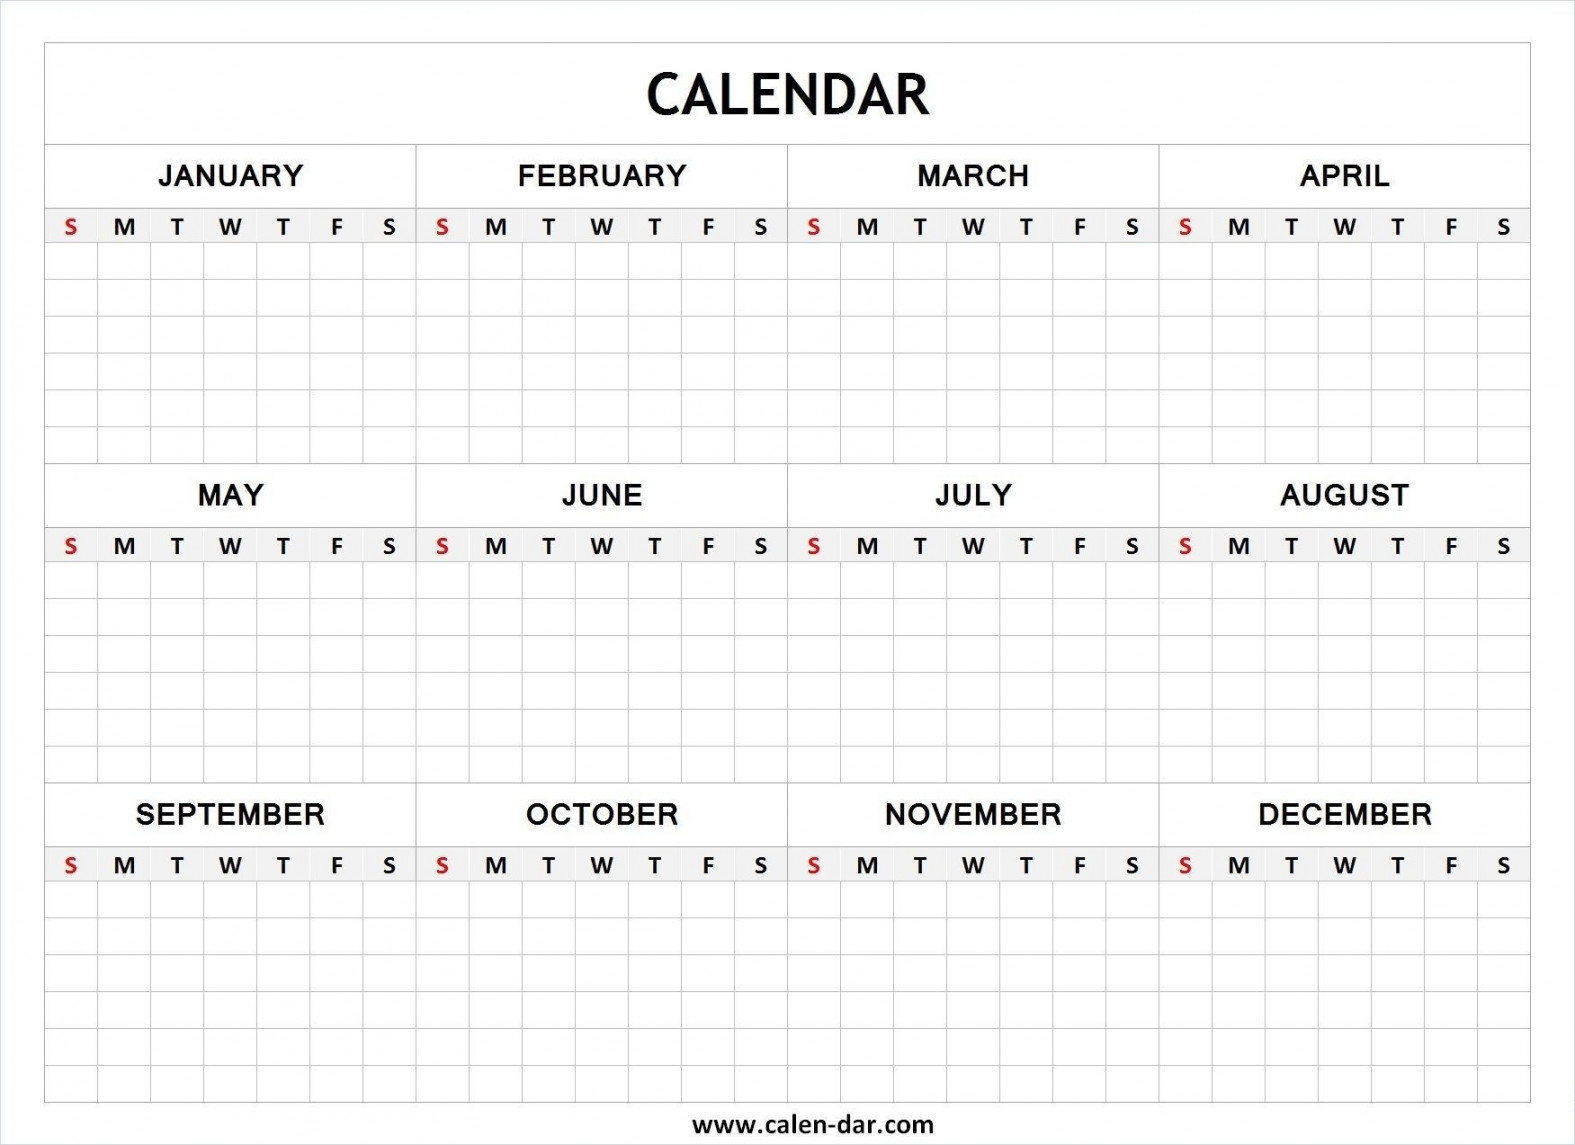 Free Yearly Calendar Template  Calendar template, Blank calendar